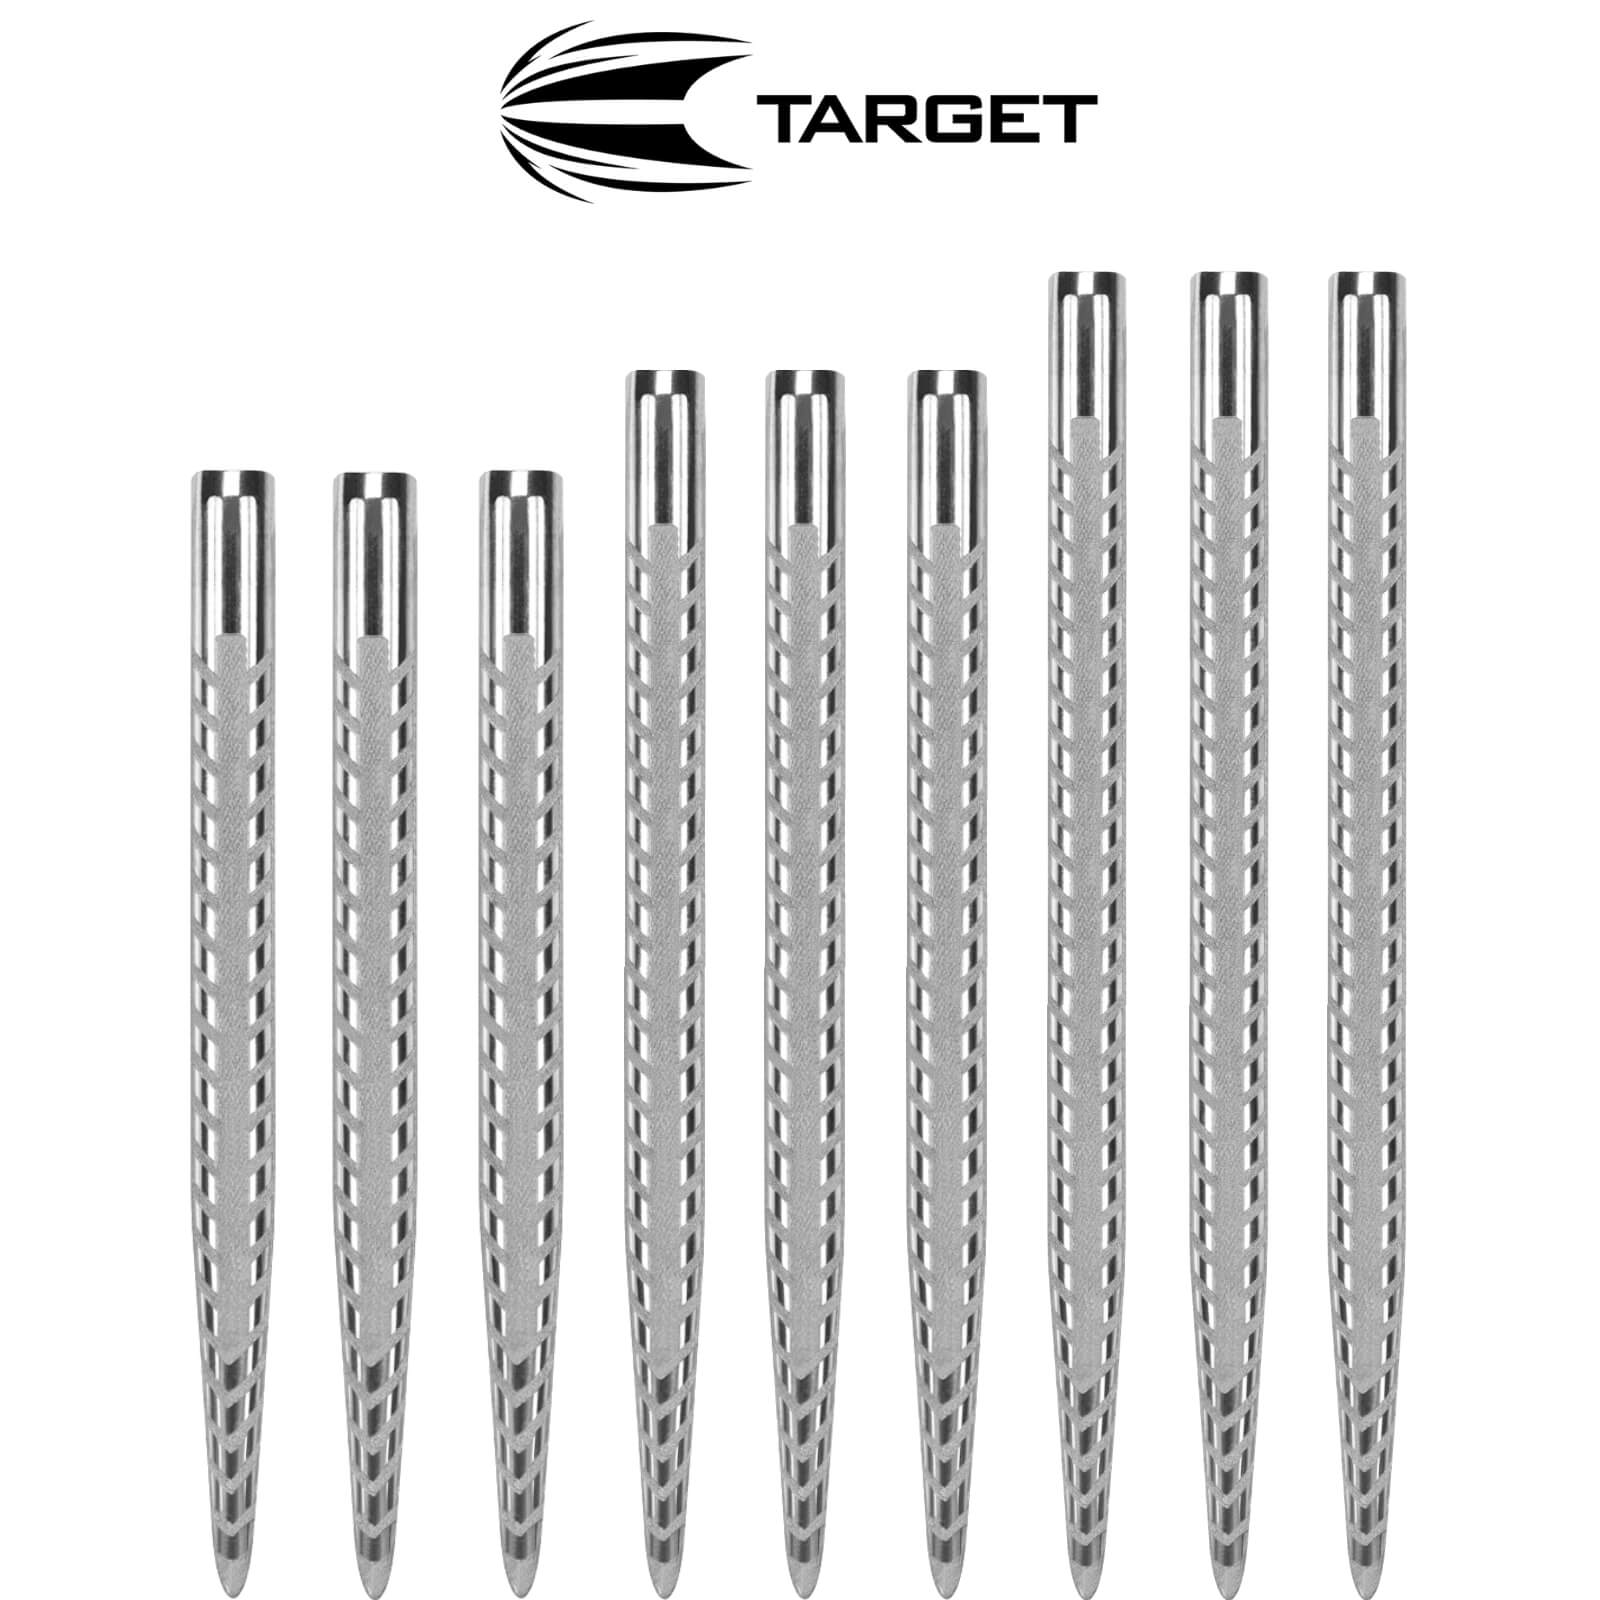 Point Accessories - Target - Quartz Pro Dart Points - 32mm 36mm 41mm 